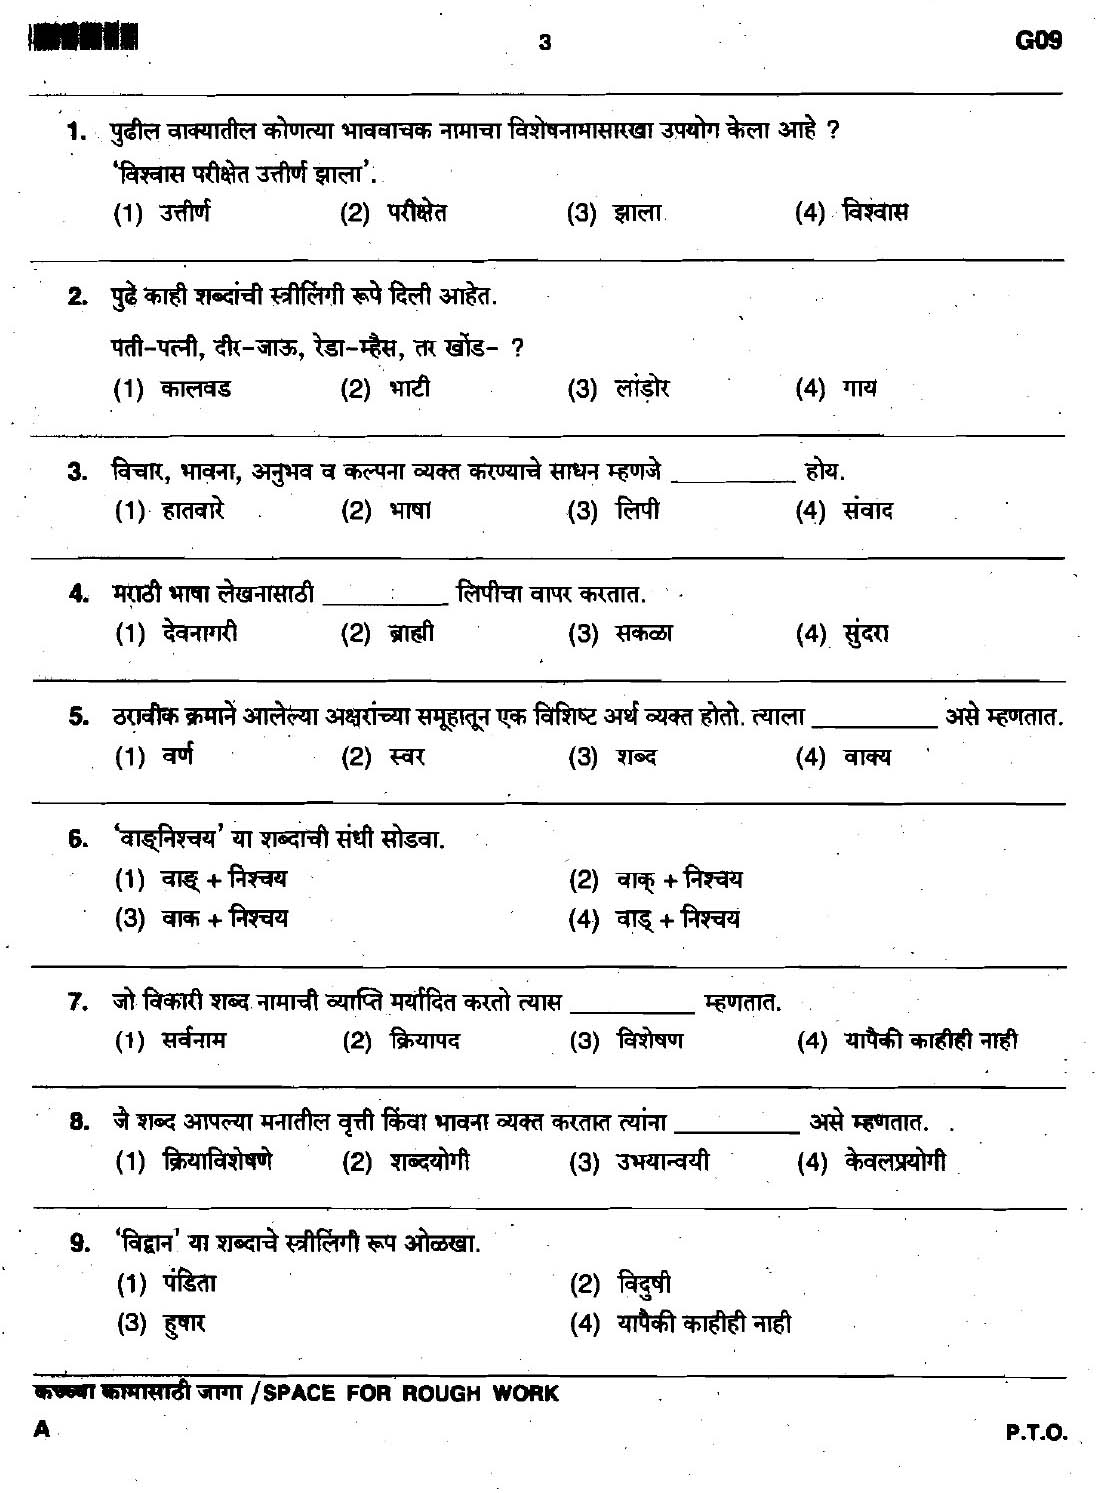 Maharashtra PSC Clerk Typist Preliminary Exam Question Paper 2017 2